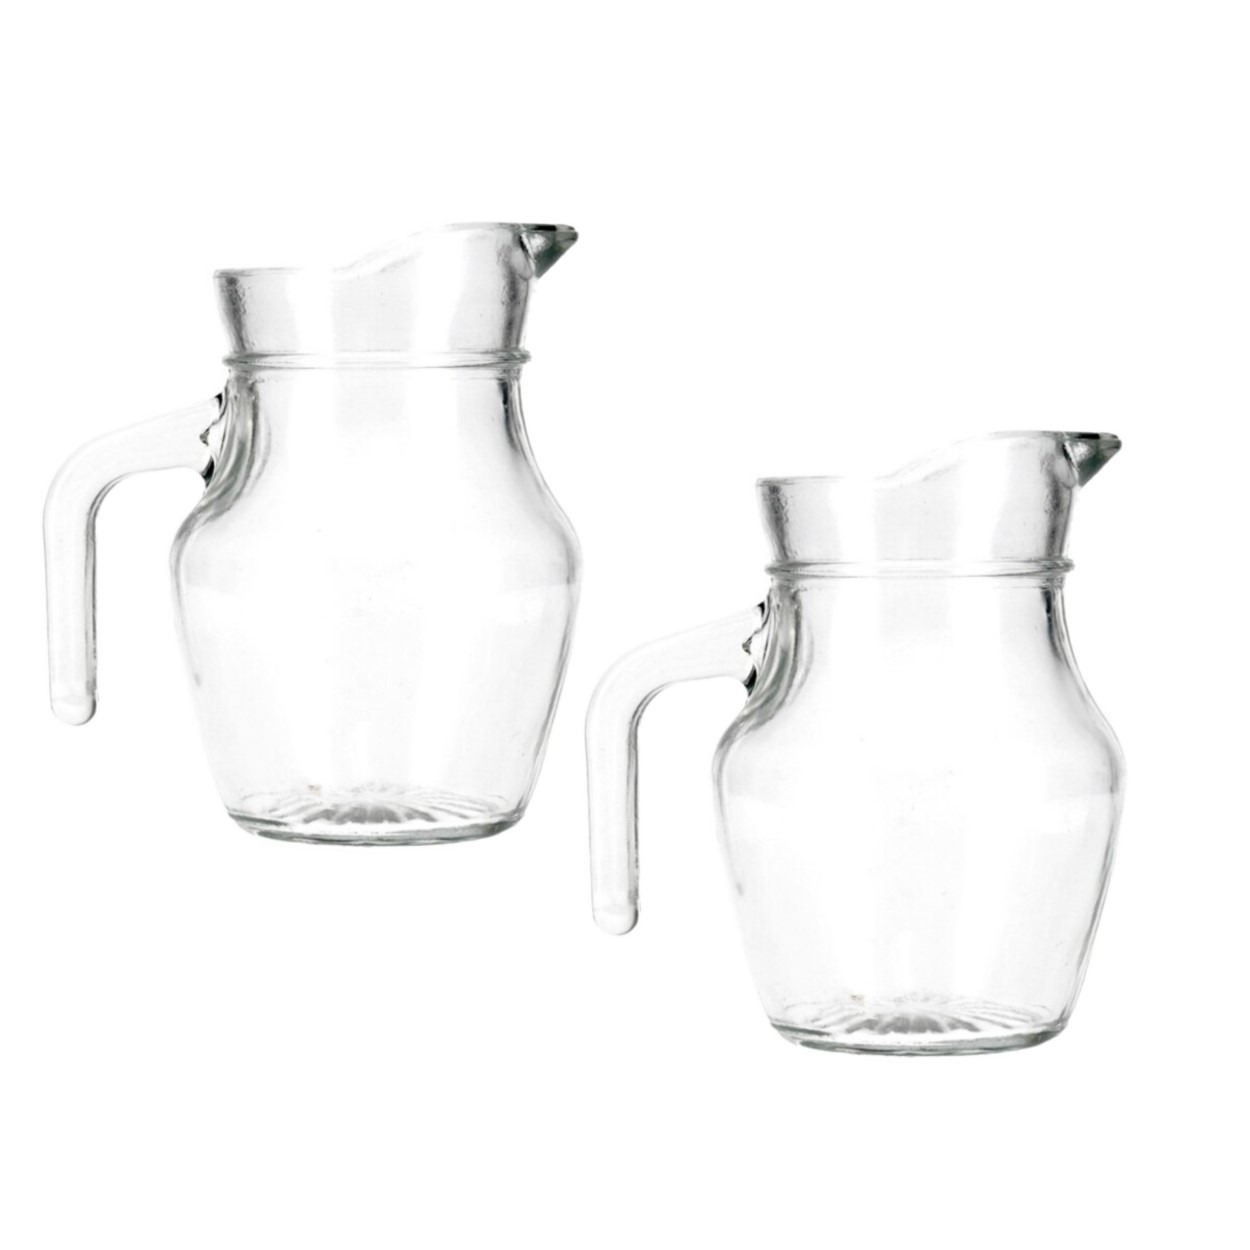 2x stuks glazen sap/waterkannen 500 ml - Sapkannen/waterkannen/schenkkannen